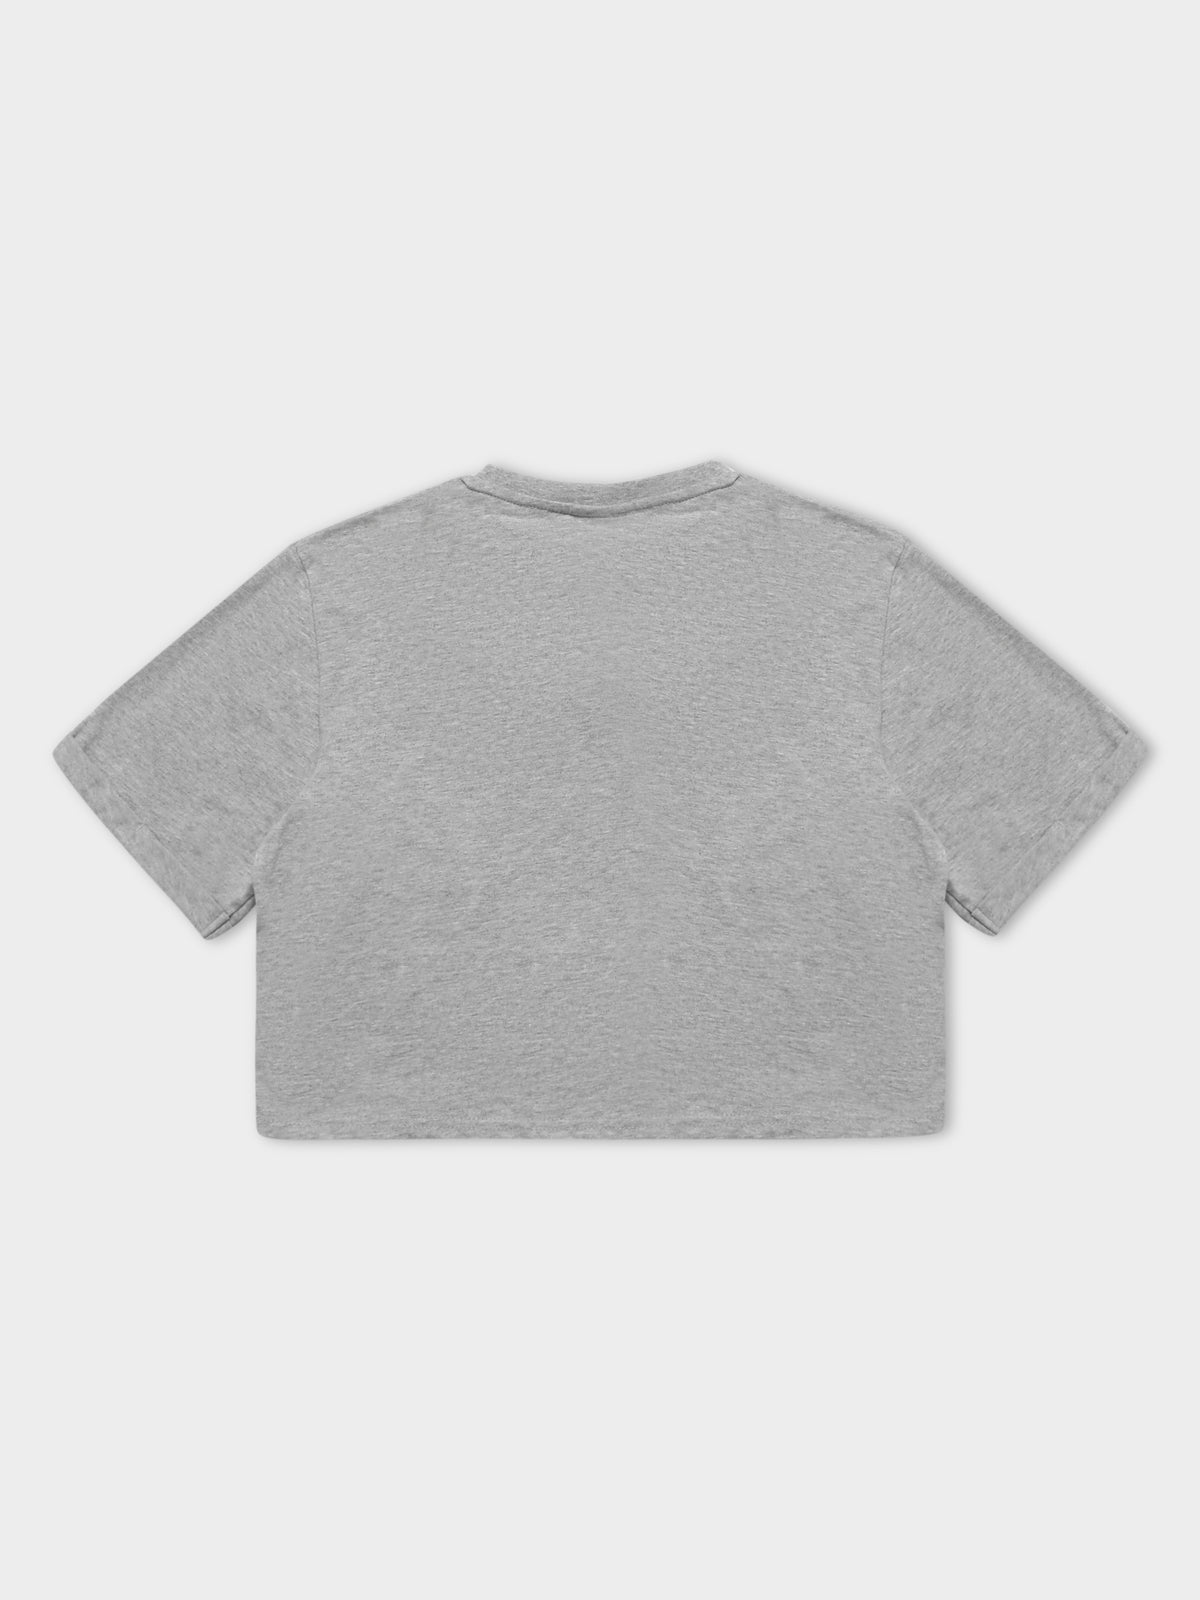 Alberta T-Shirt in Grey Marle